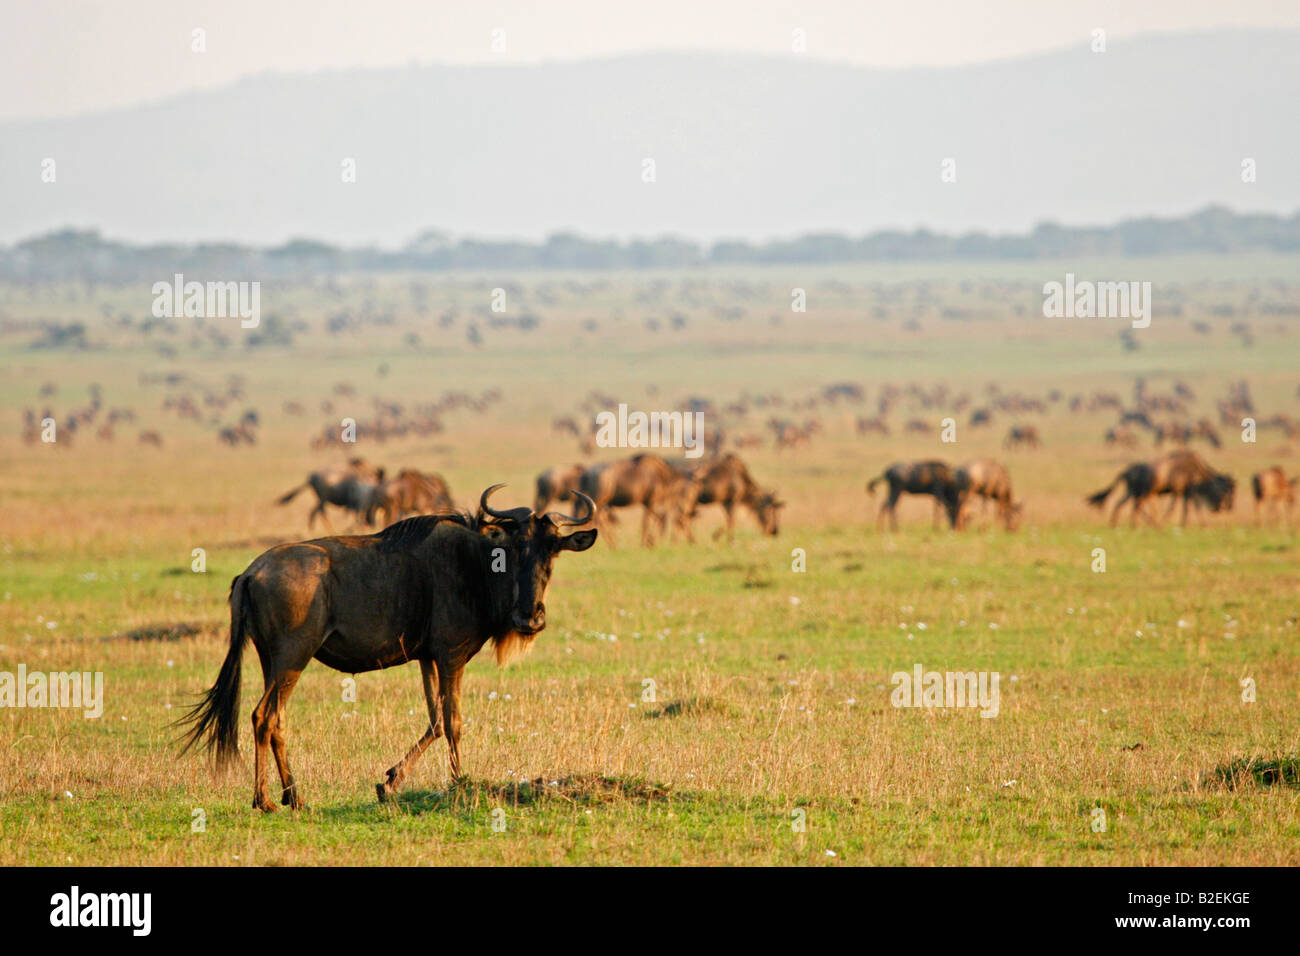 Vast herds of Blue wildebeest grazing on the plains Stock Photo